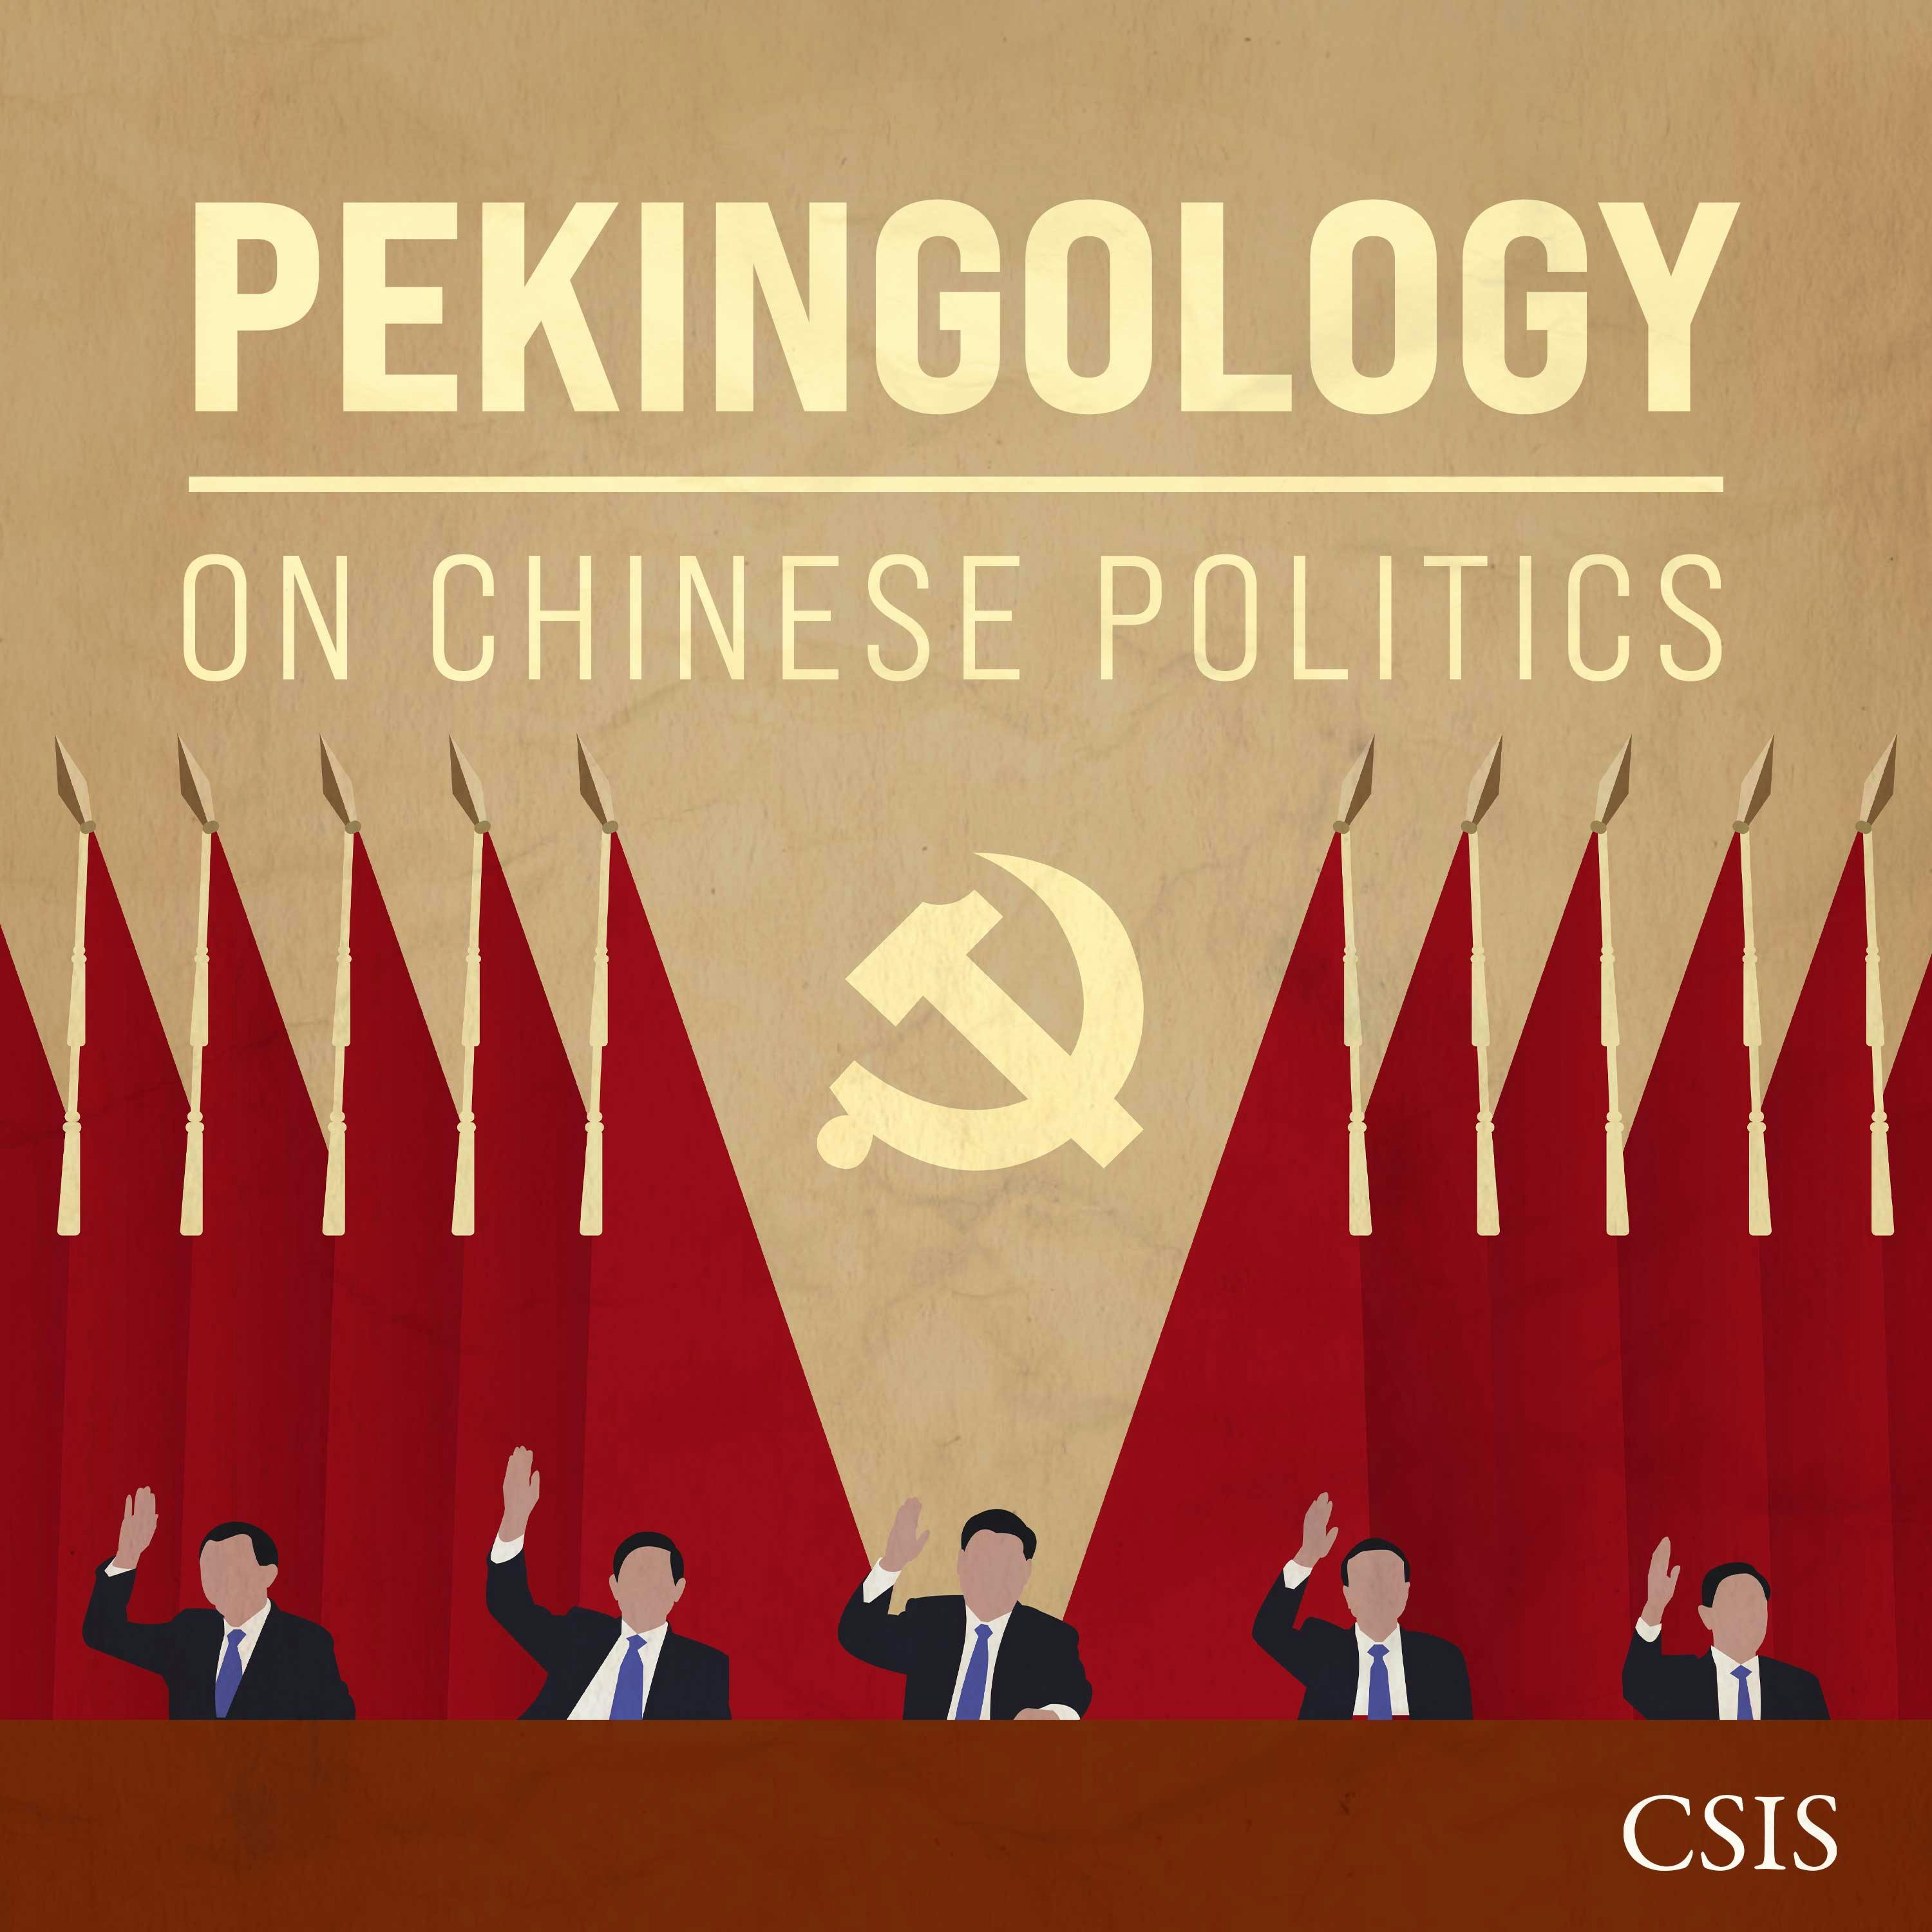 Do Intellectuals Matter in Xi's China?